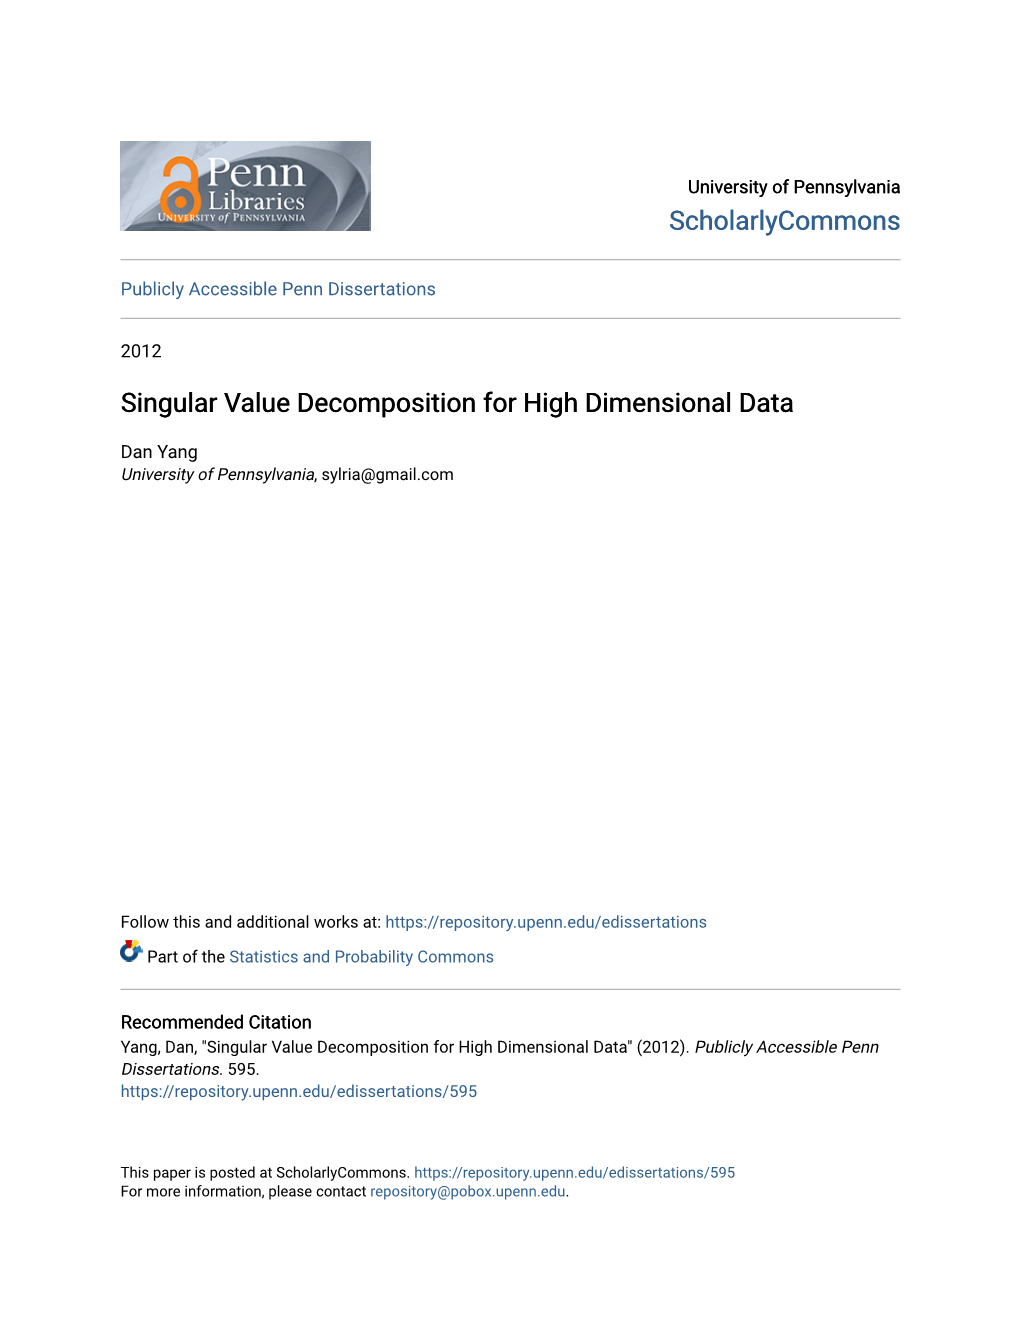 Singular Value Decomposition for High Dimensional Data